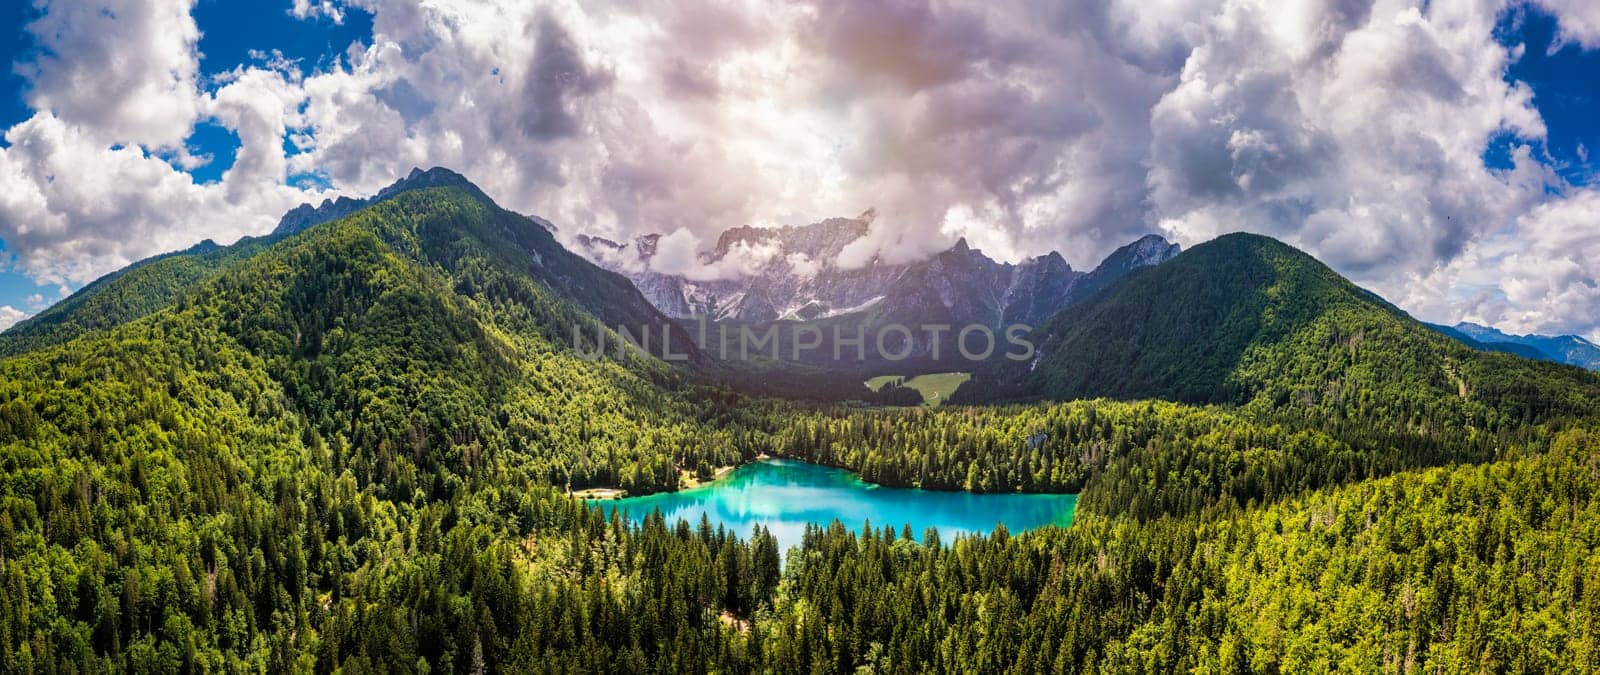 Picturesque lake Lago Fusine in Italy. Fusine lake with Mangart peak on background. Popular travel destination of Julian Alps. Location: Tarvisio comune , Province of Udine, Italy, Europe.